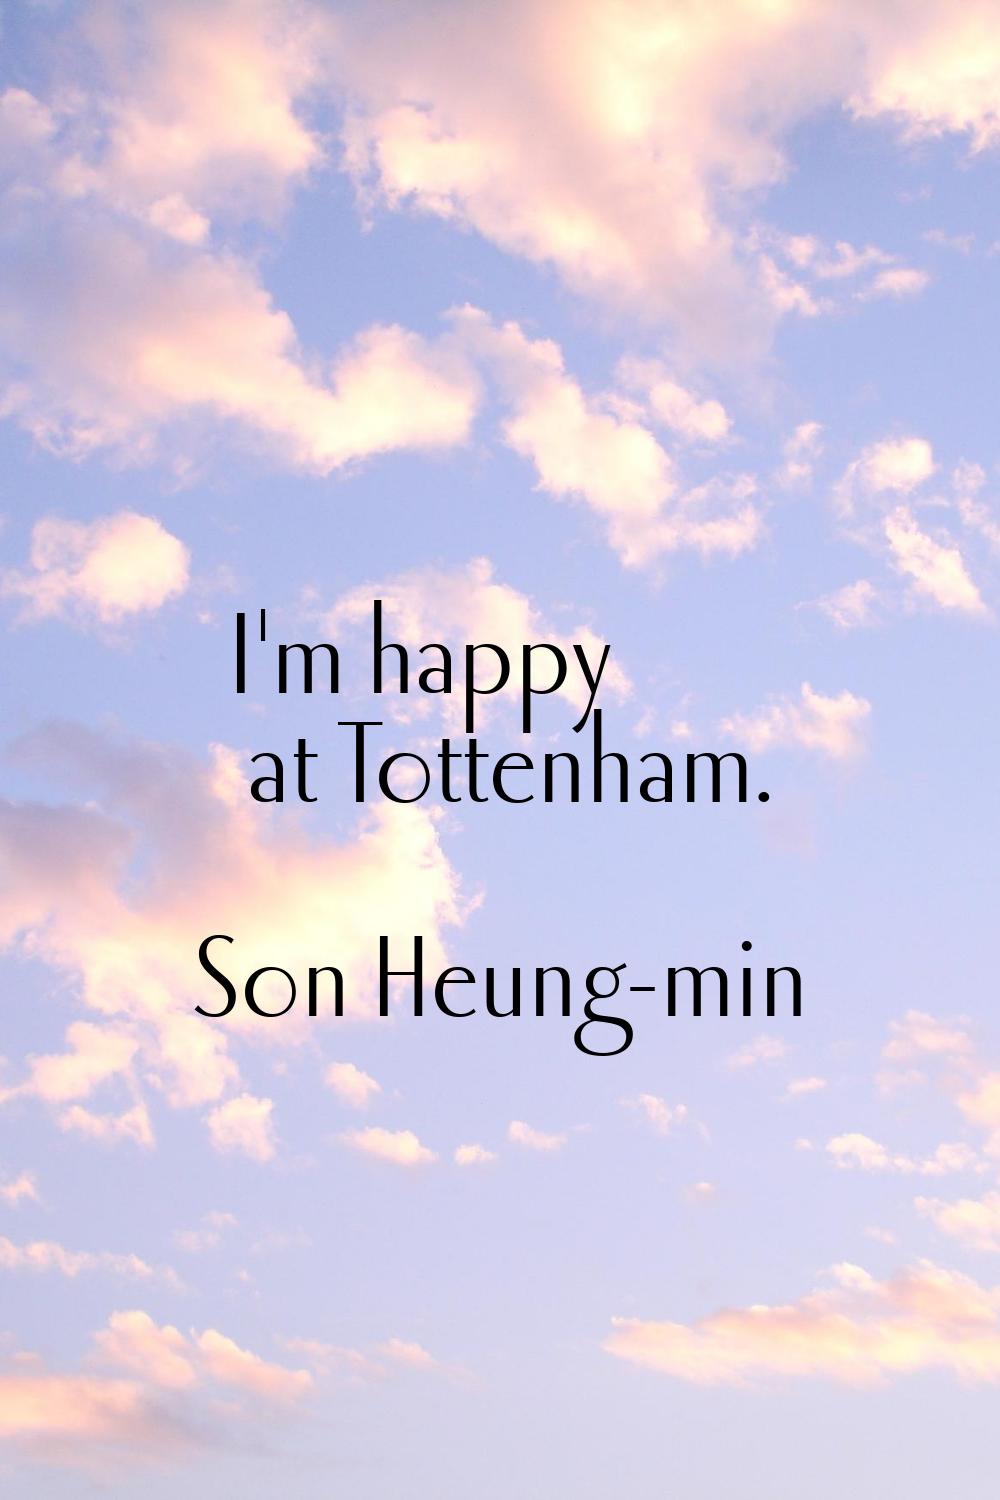 I'm happy at Tottenham.